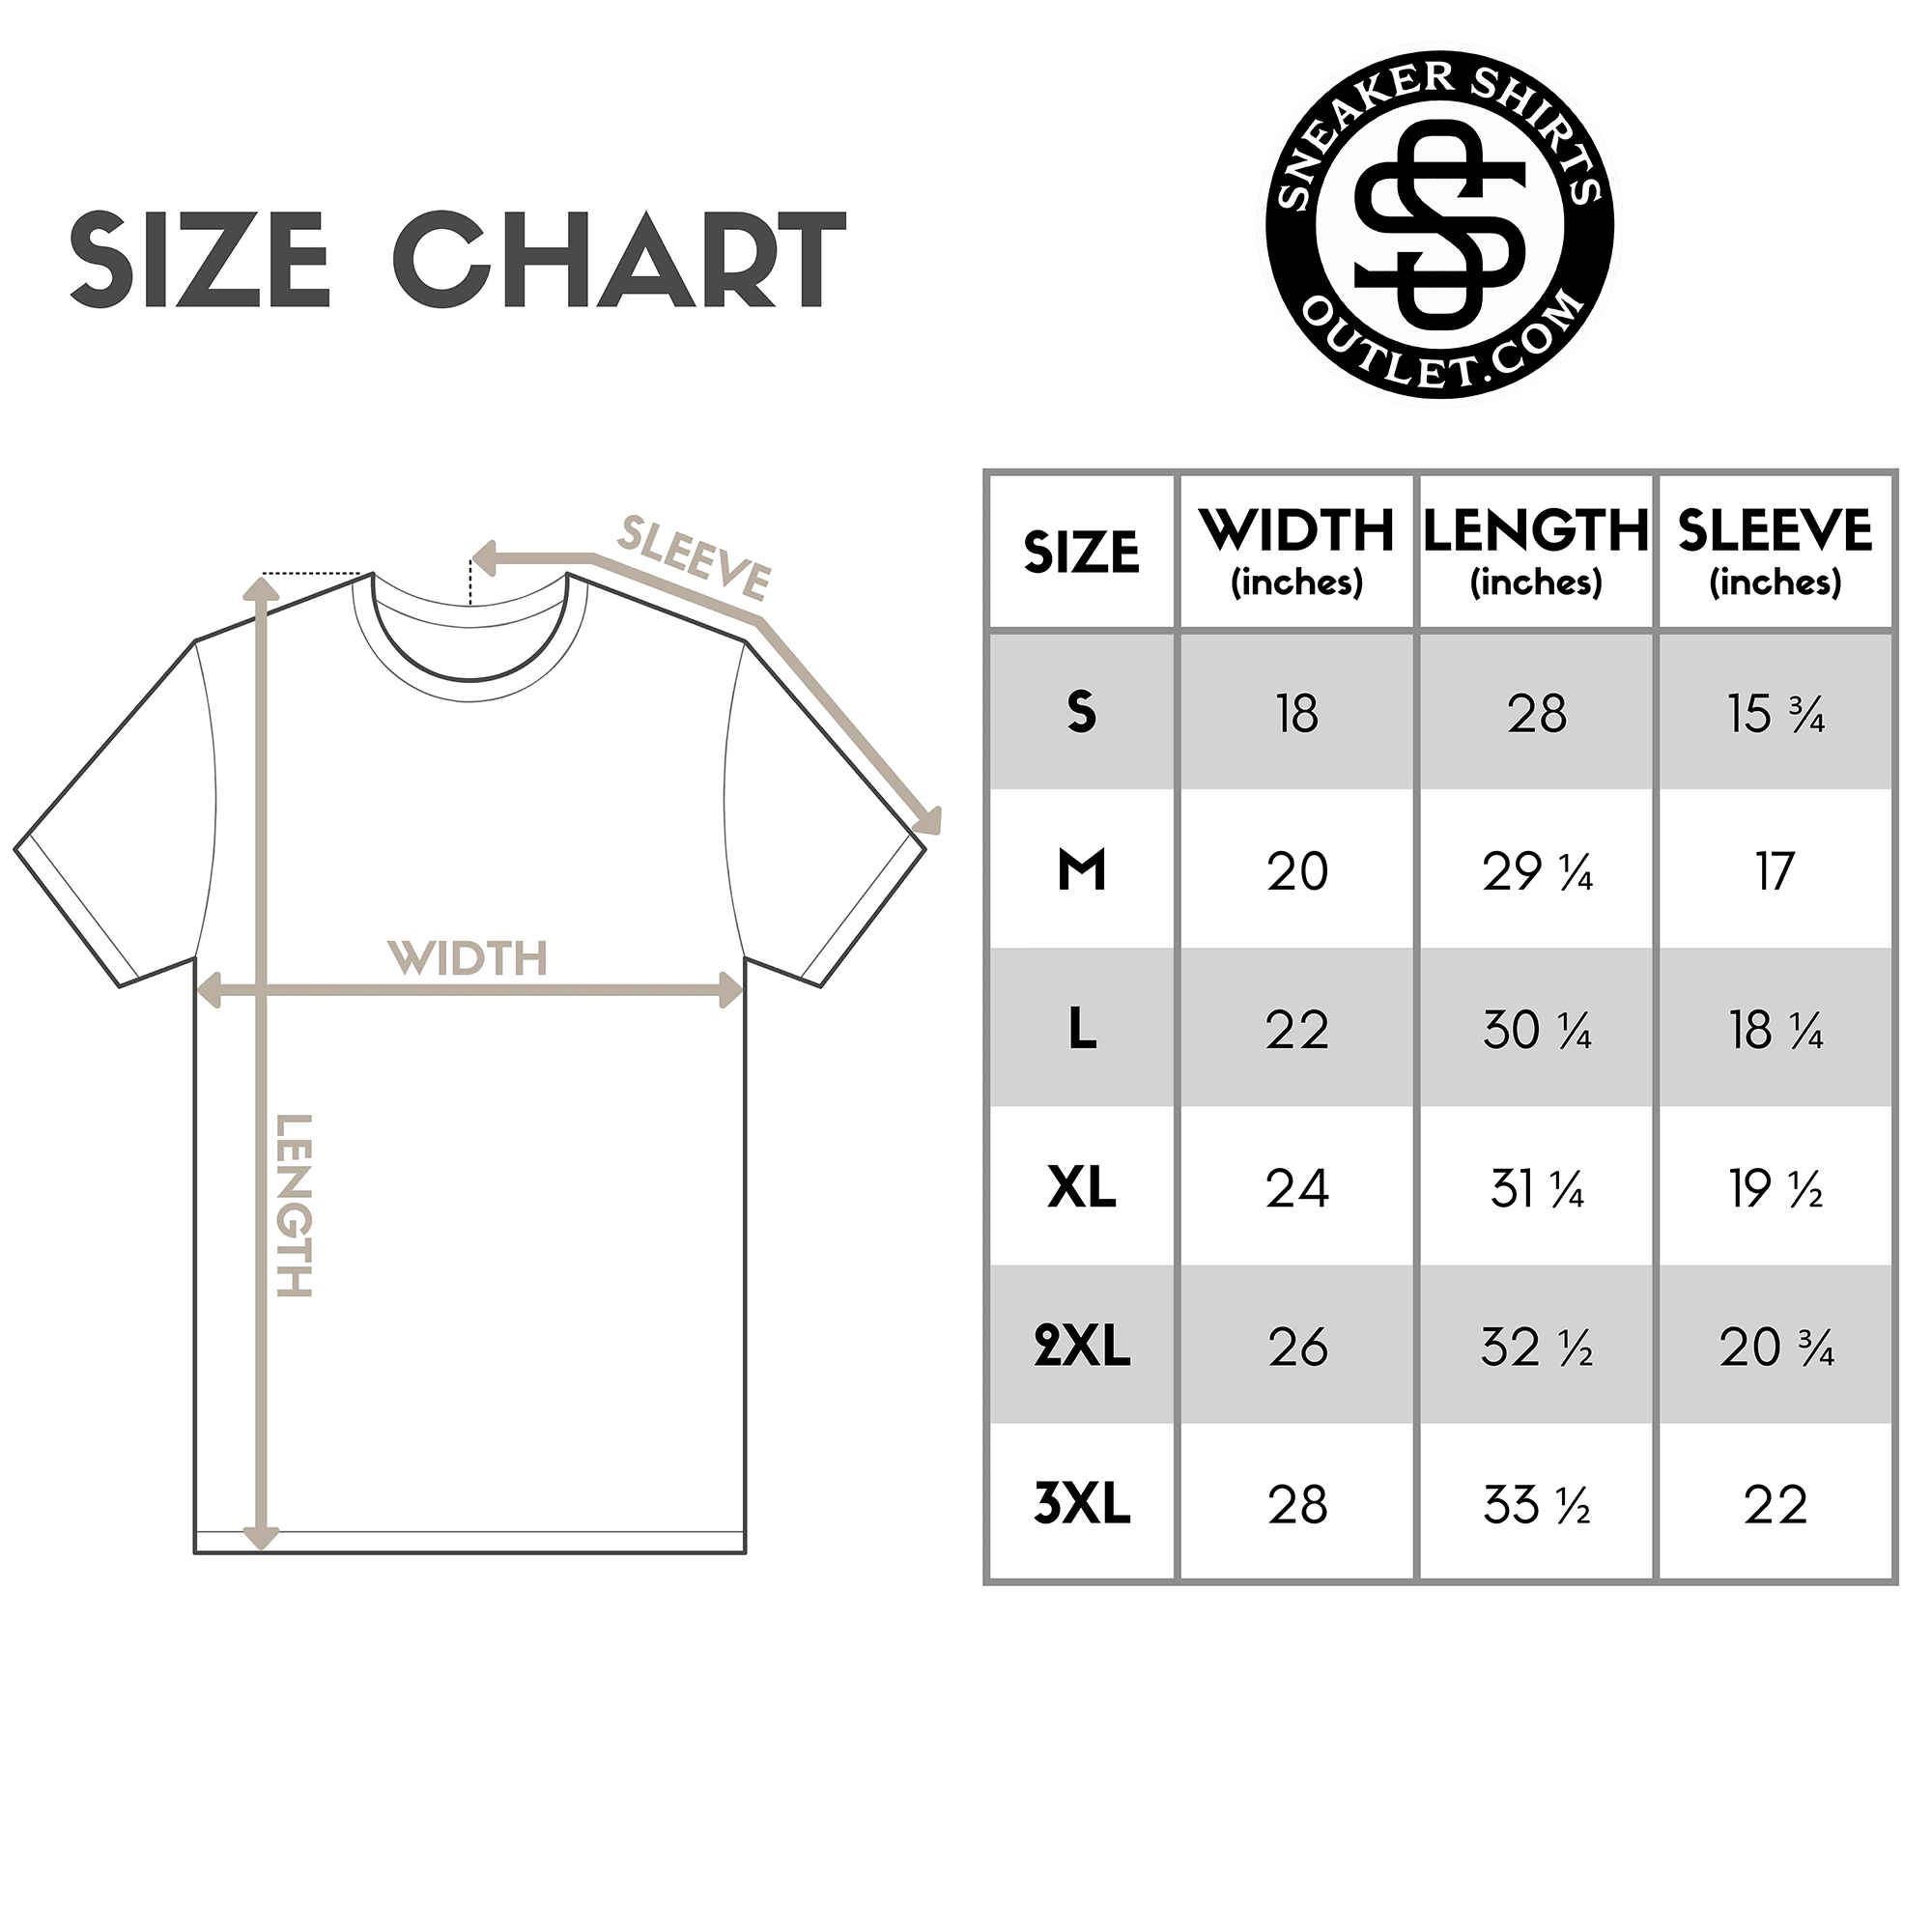 size chart 23 Melting Shirt Nike Dunk High Knicks photo